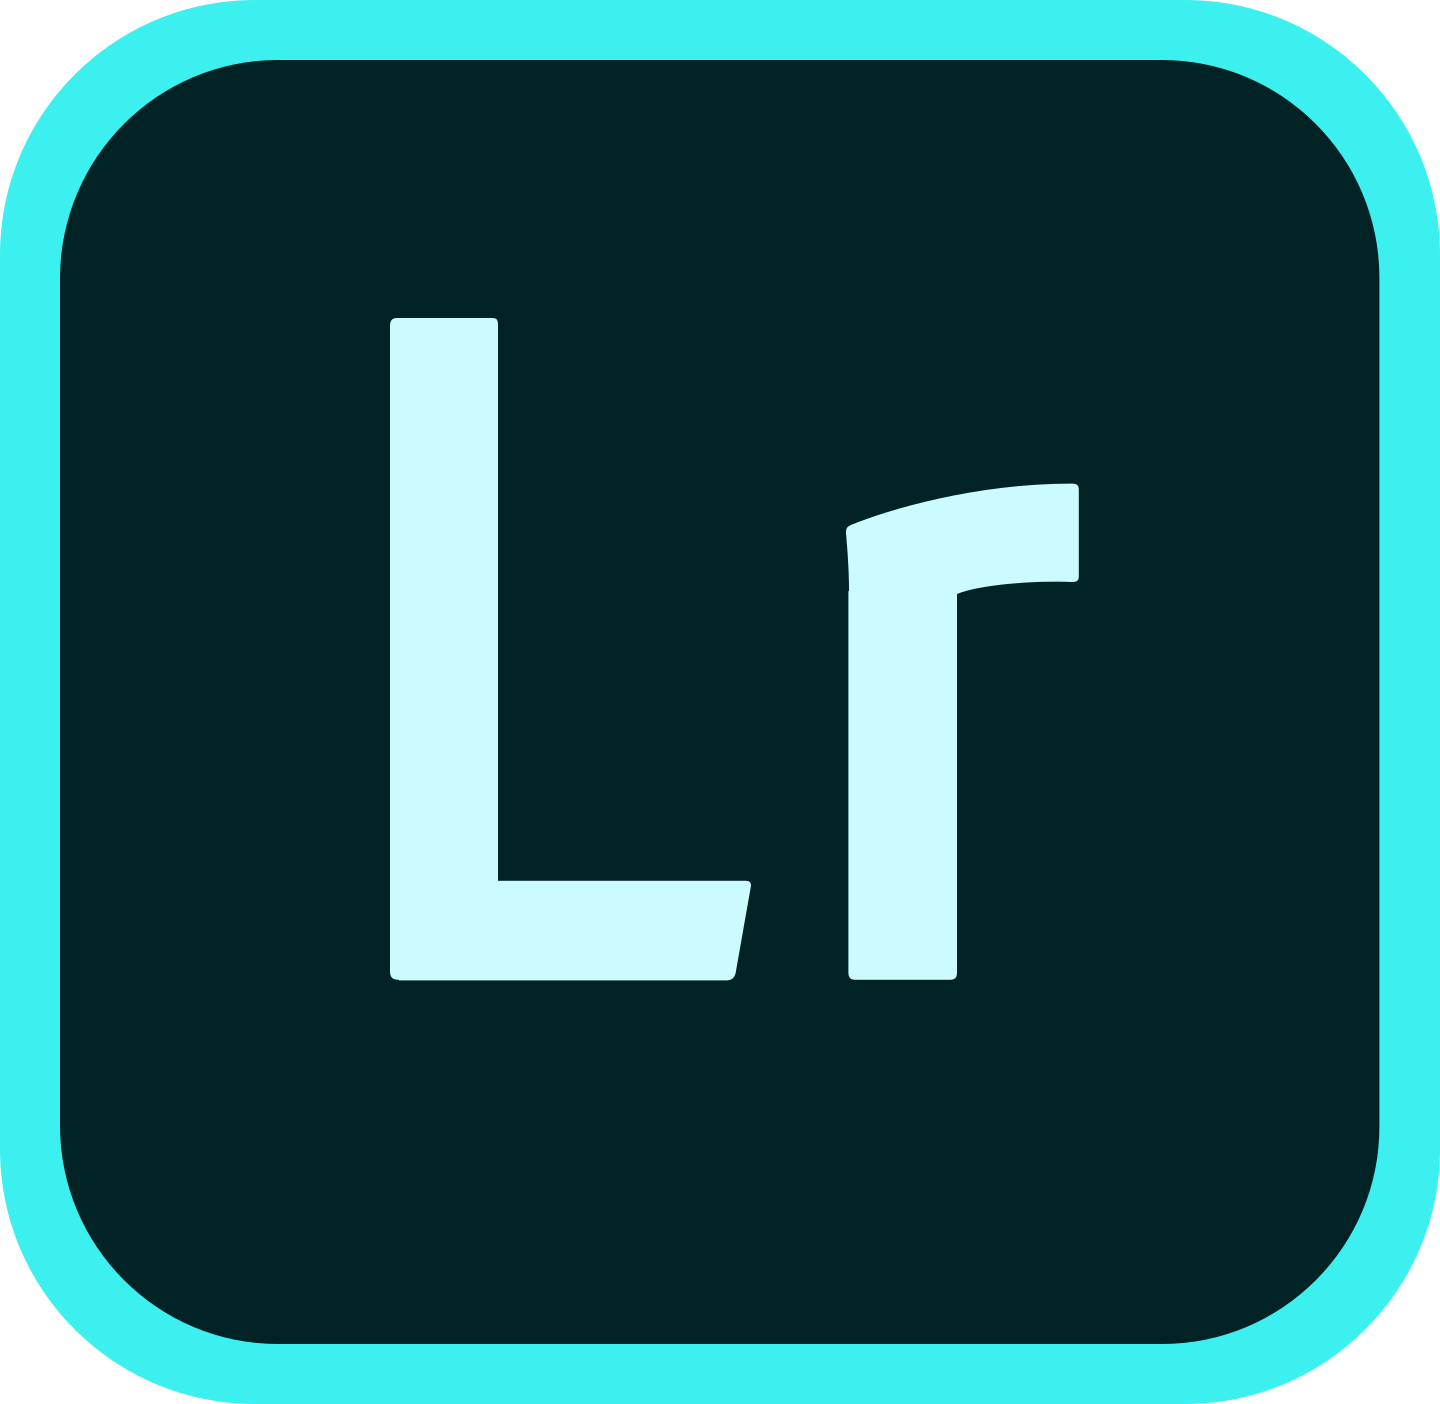 lightroom logo 2 - Adobe Lightroom Logo